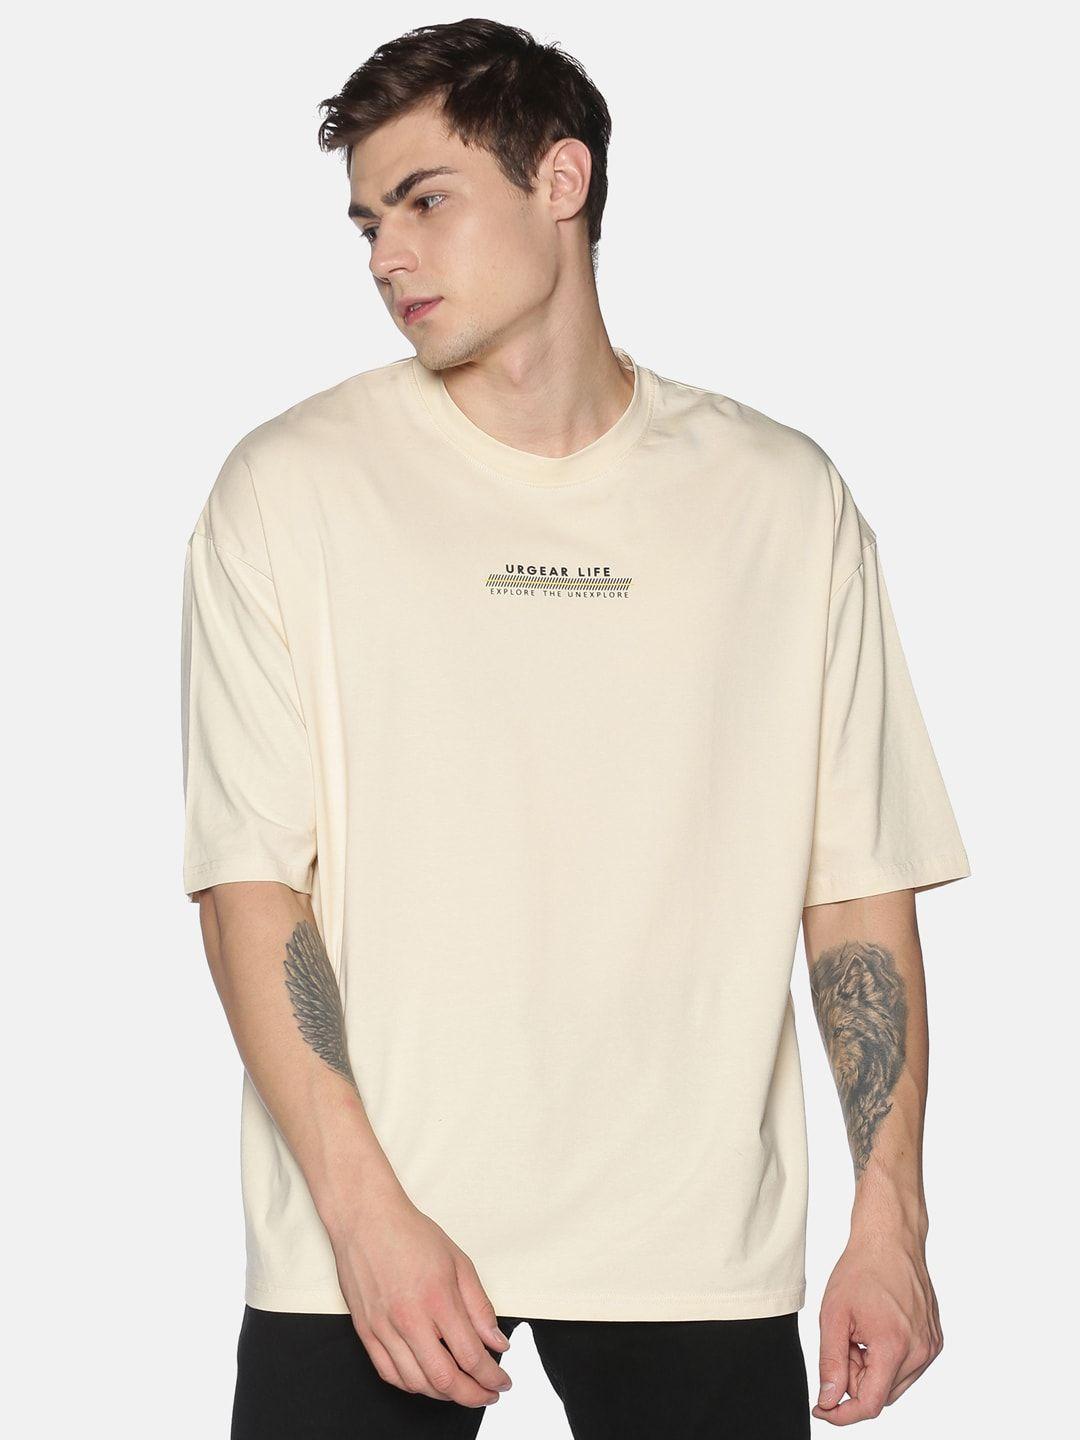 urgear men off-white solid round neck pure cotton oversized pure cotton t-shirt